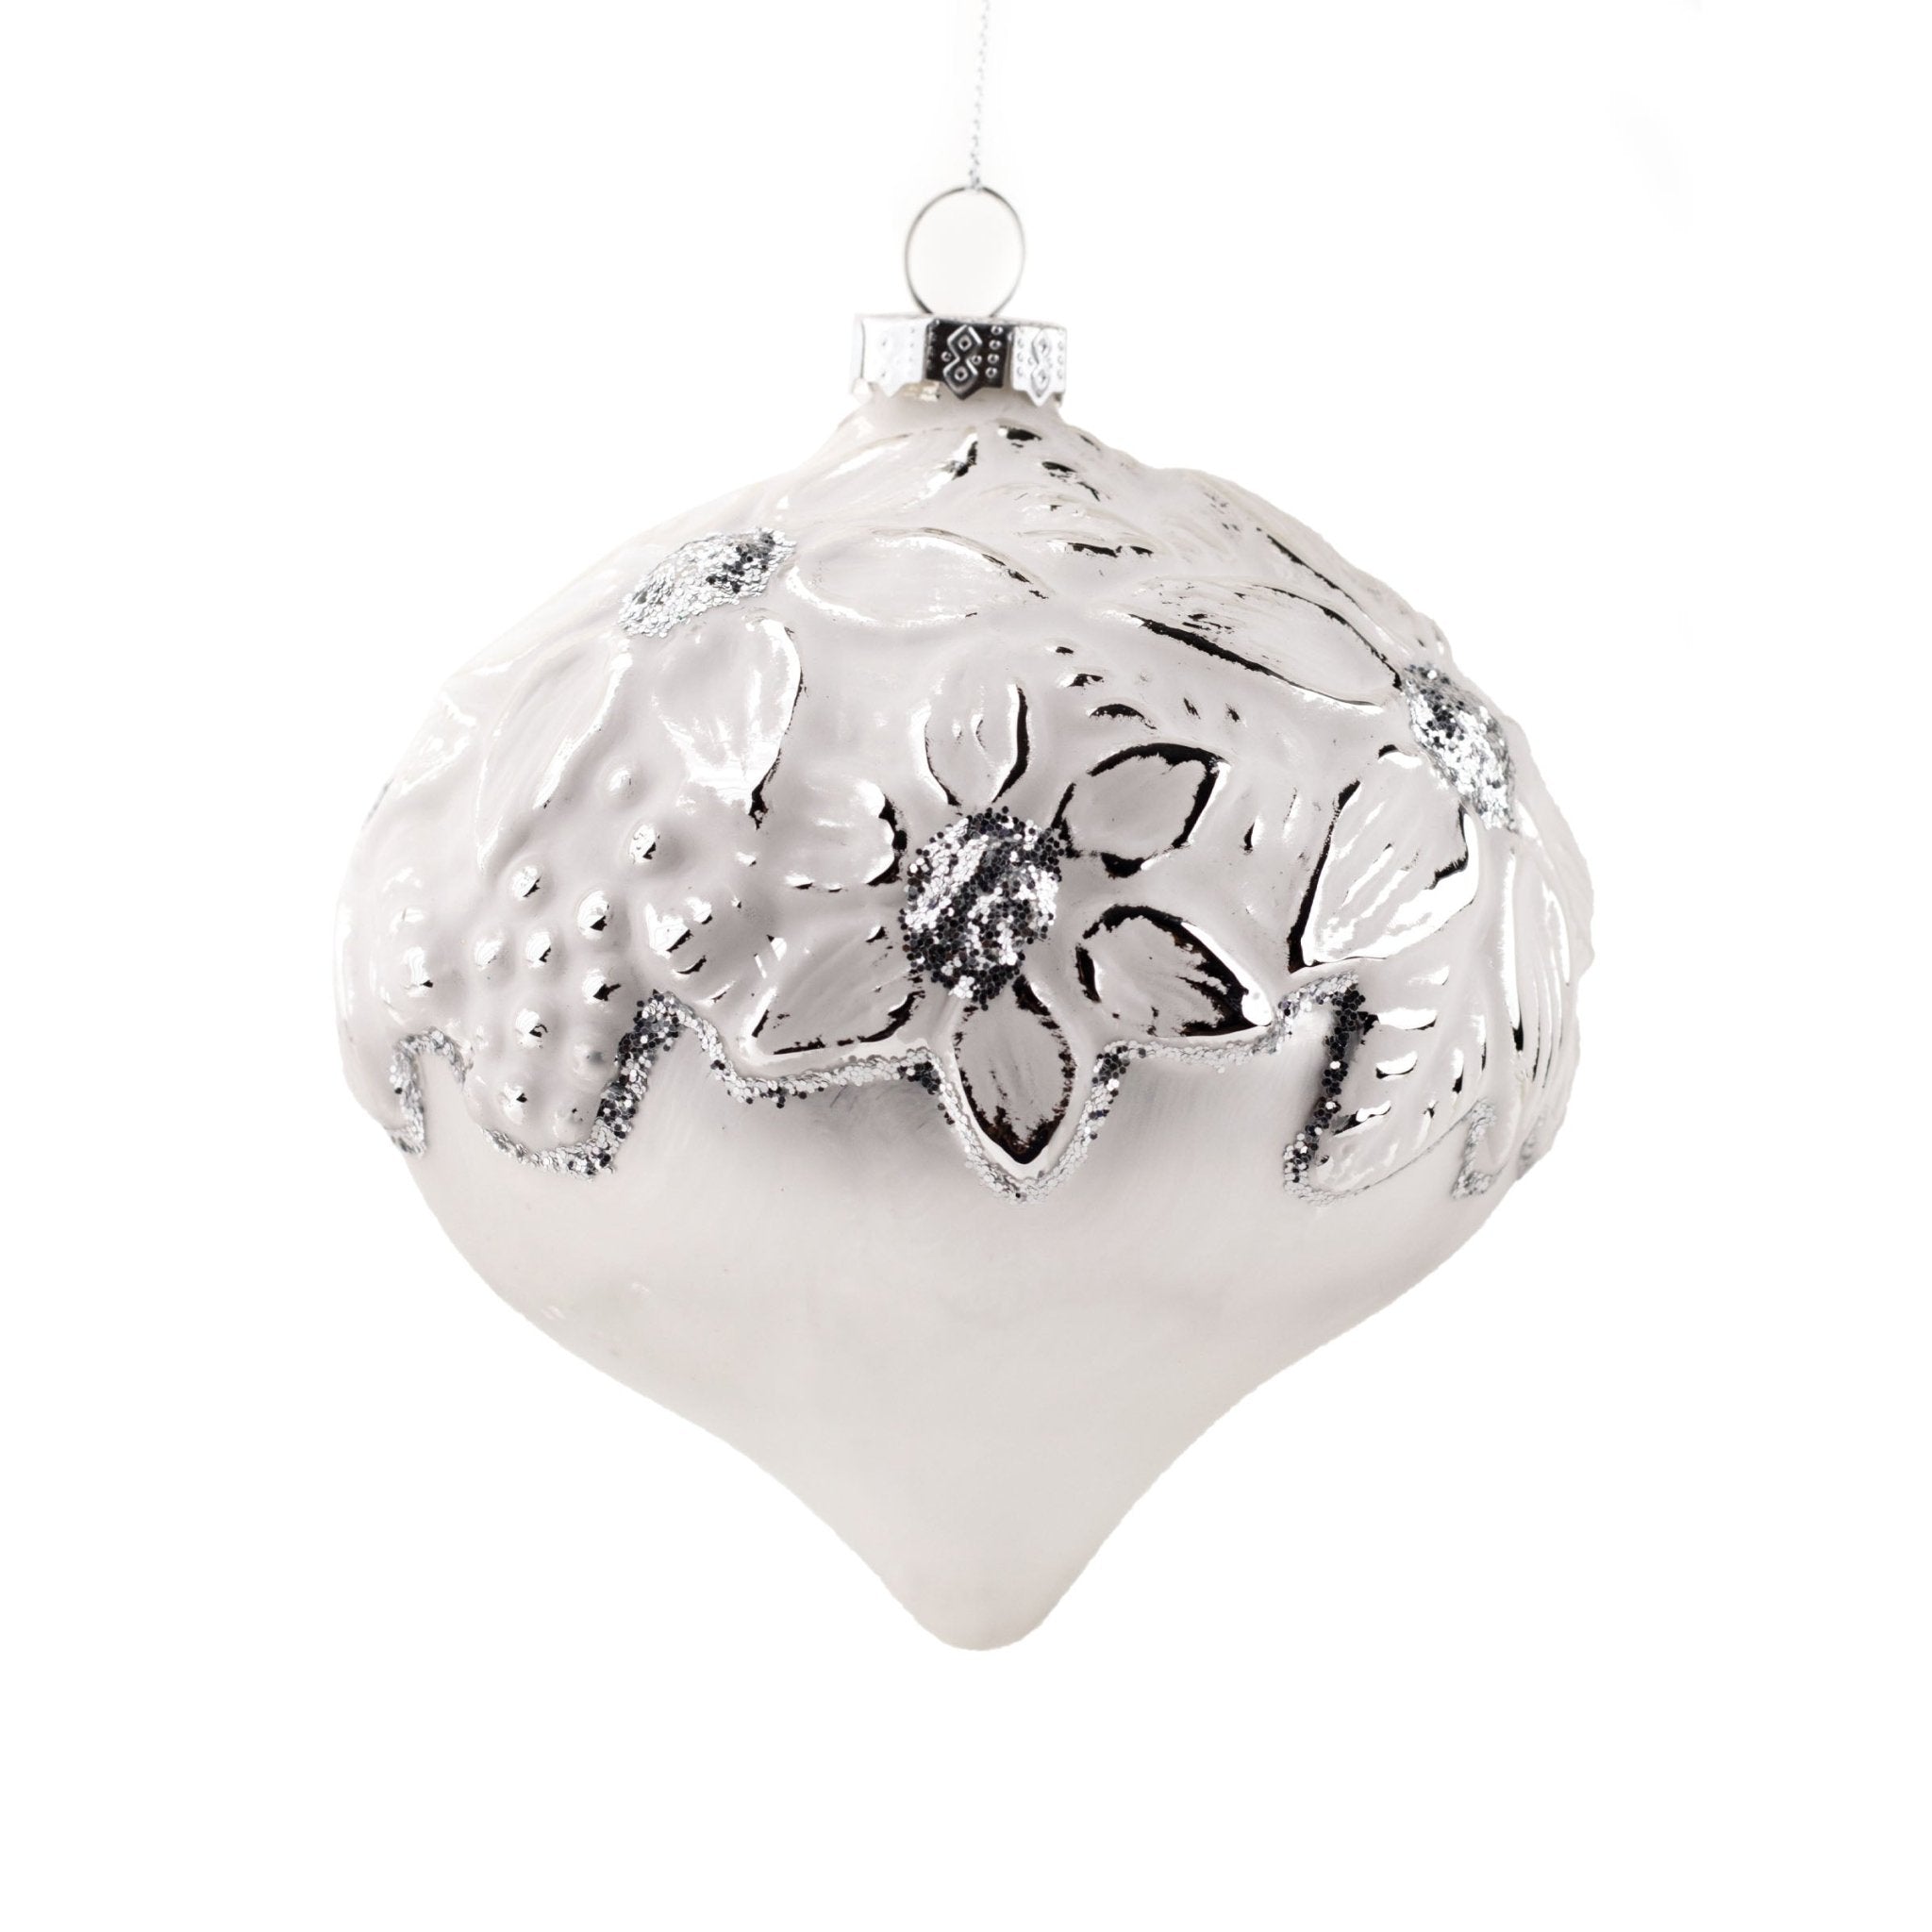 10cm White Flower Onion Glass Ornament OGS025 - MODA FLORA Santa's Workshop